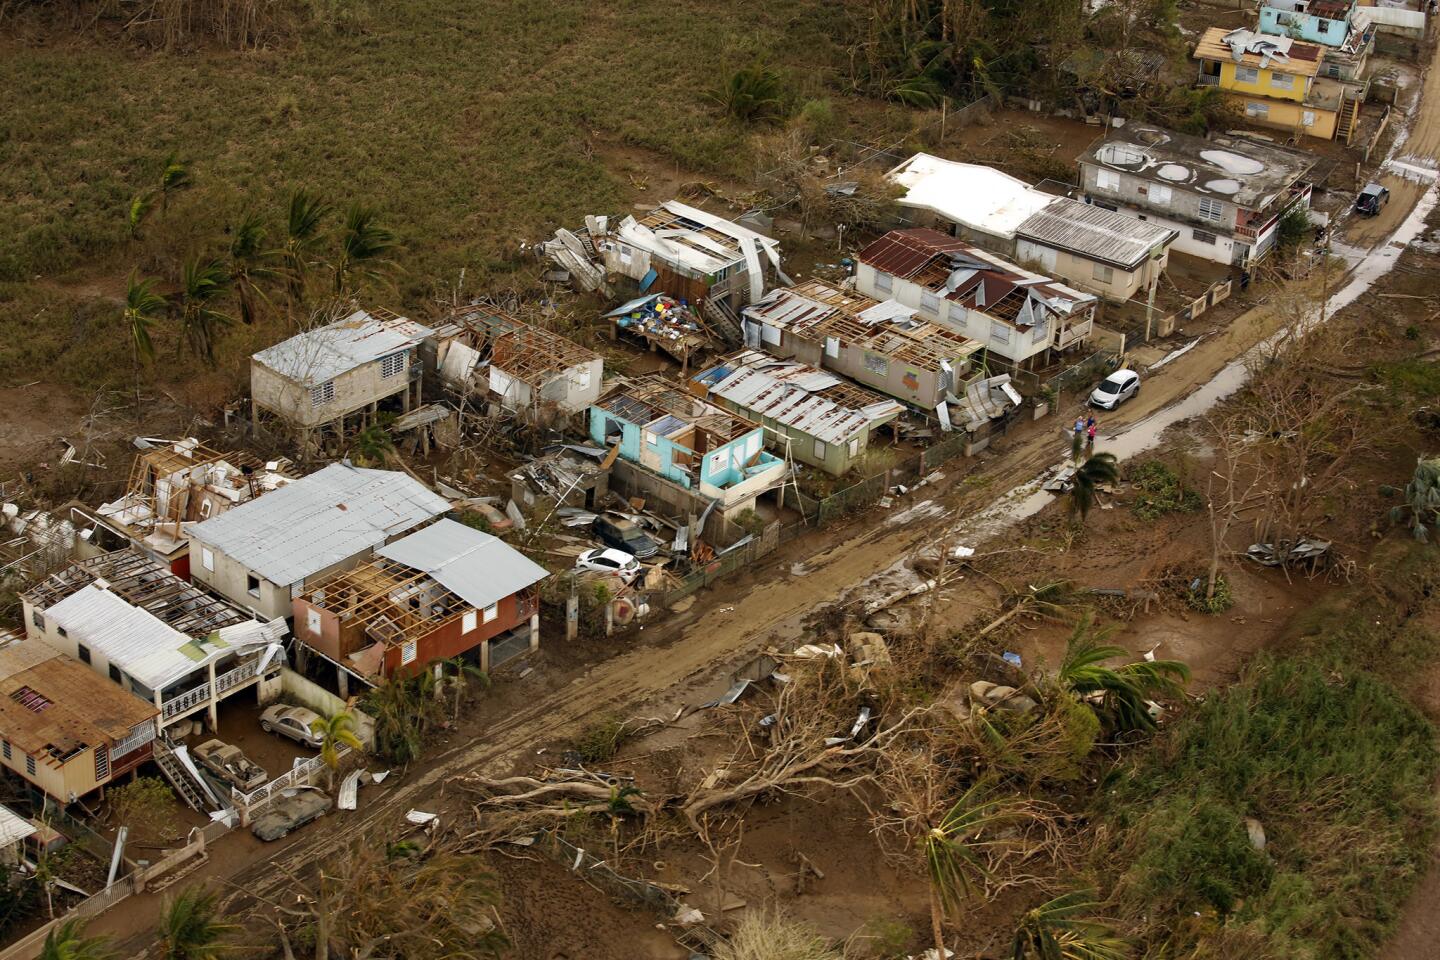 Hurricane Maria devastated the island of Puerto Rico causing heavy damage to many homes.